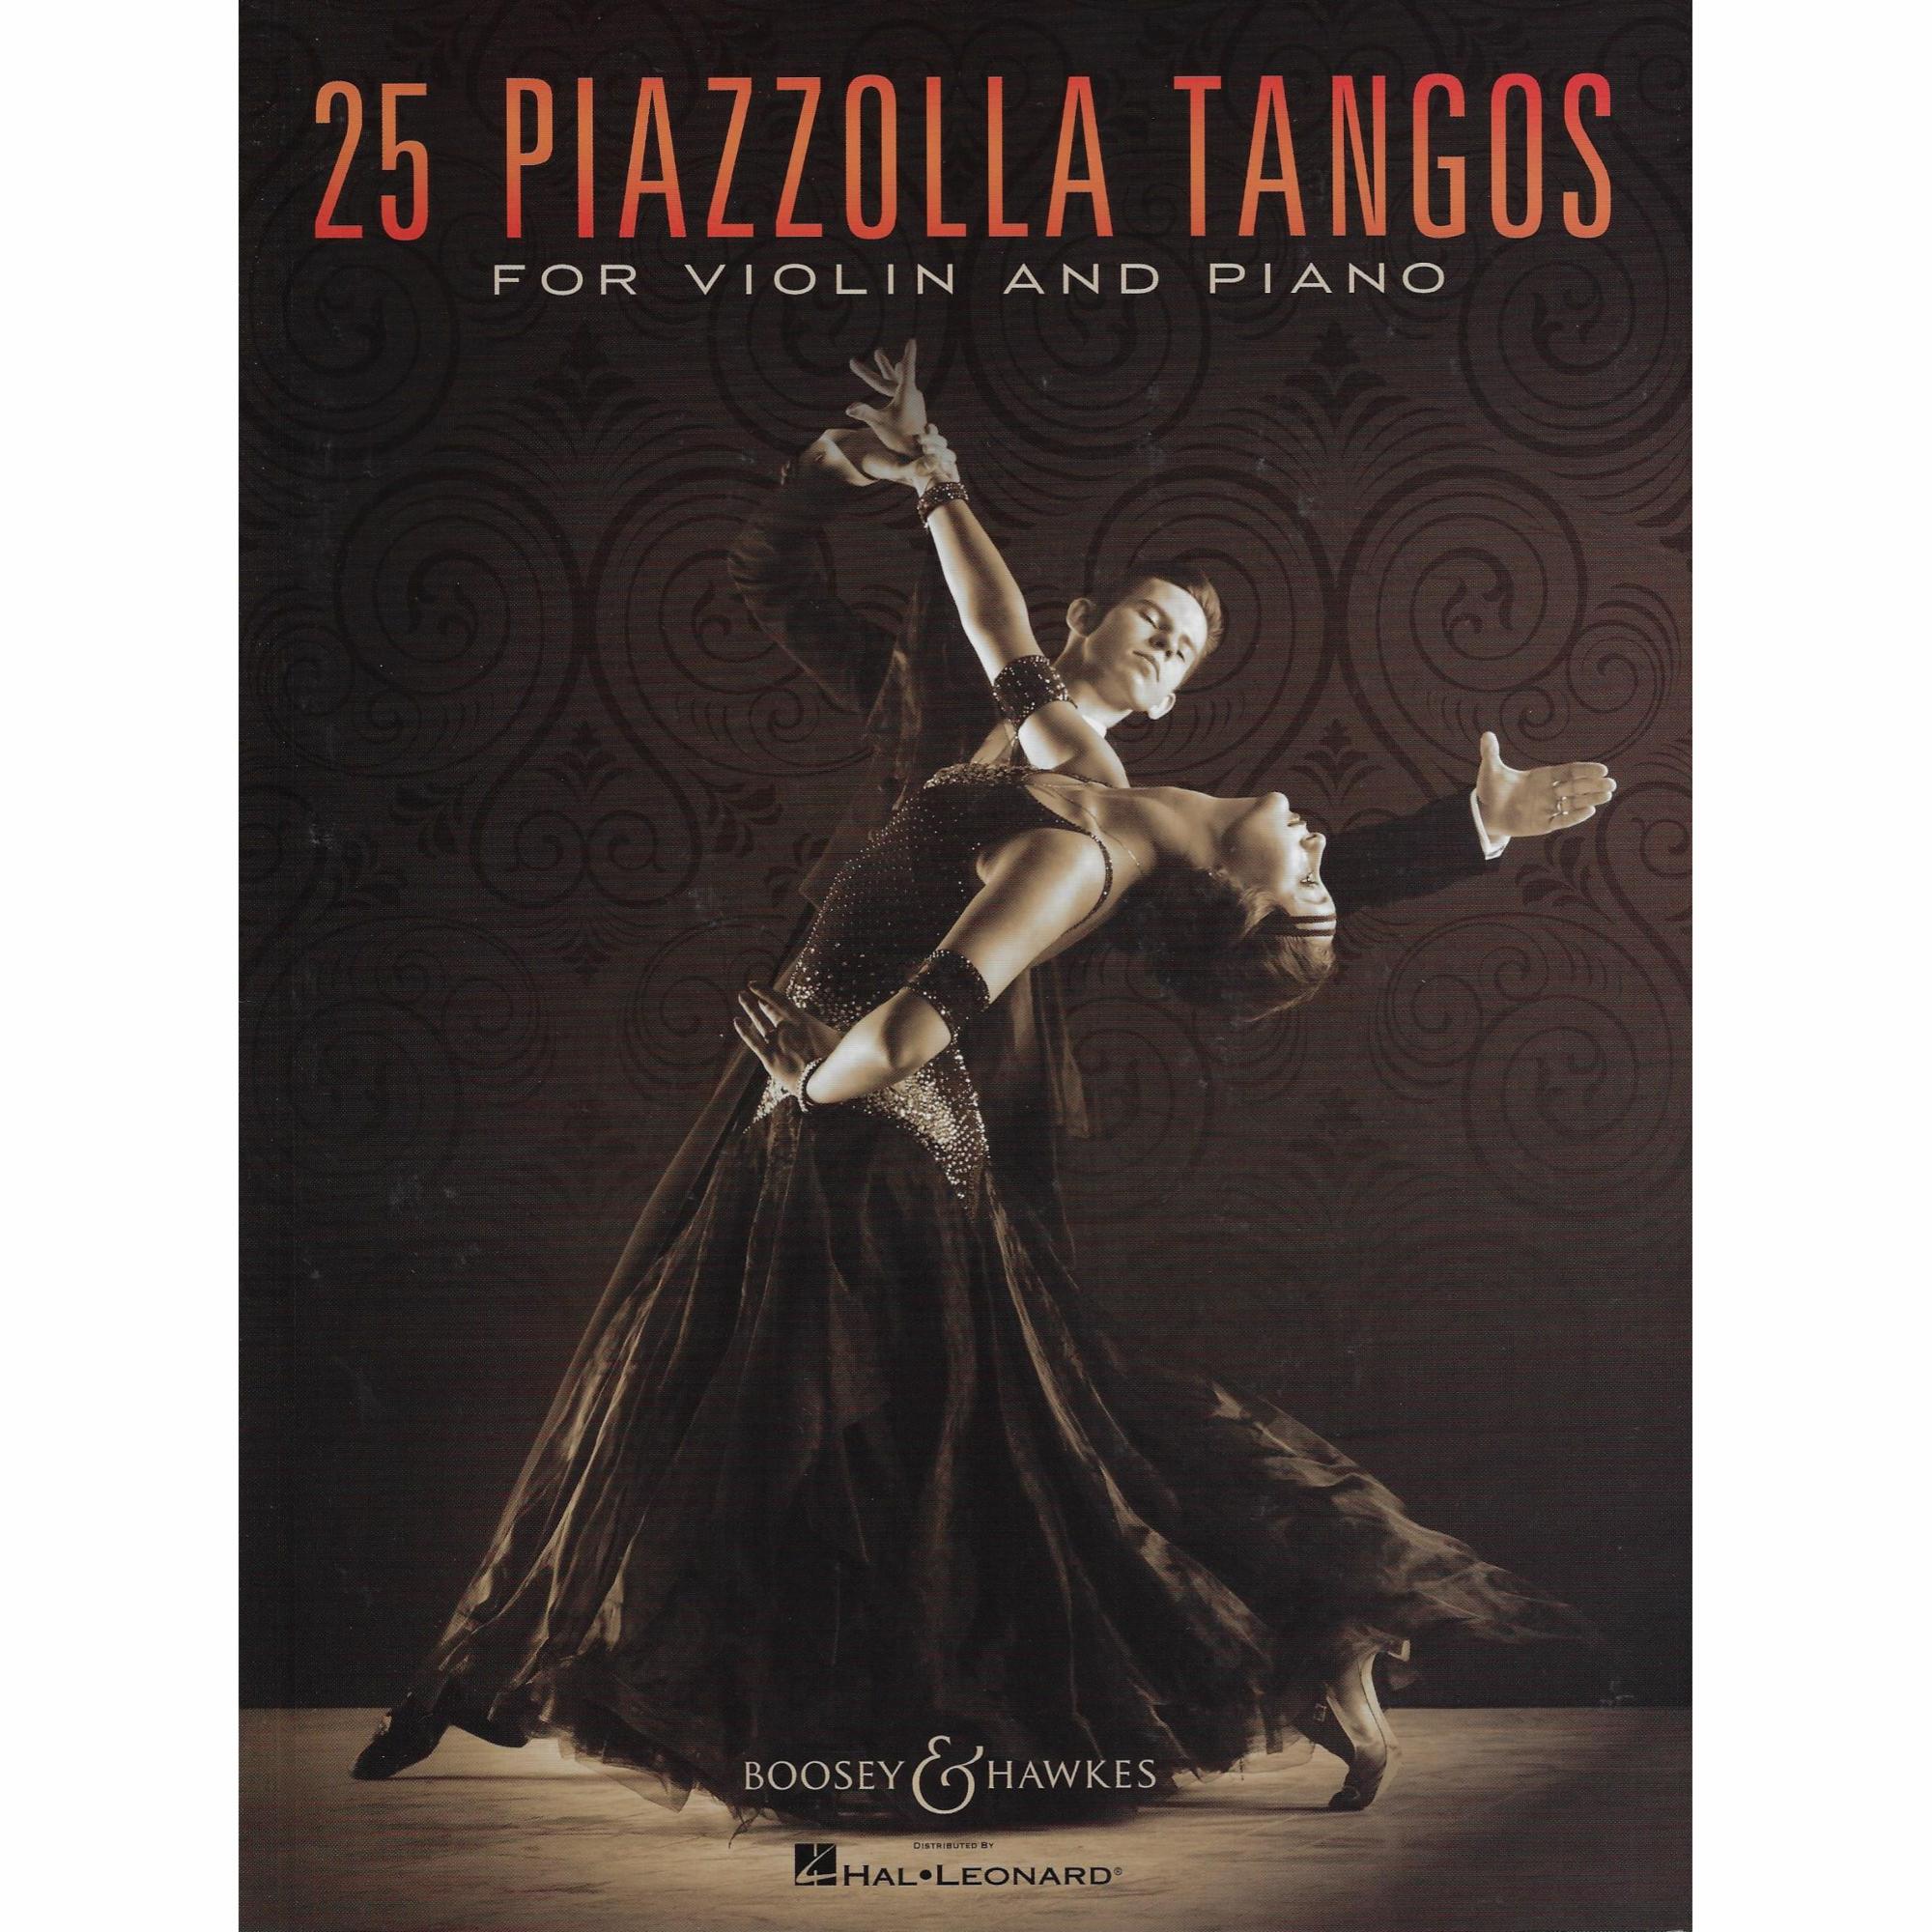 25 Piazzolla Tangos for Violin and Piano